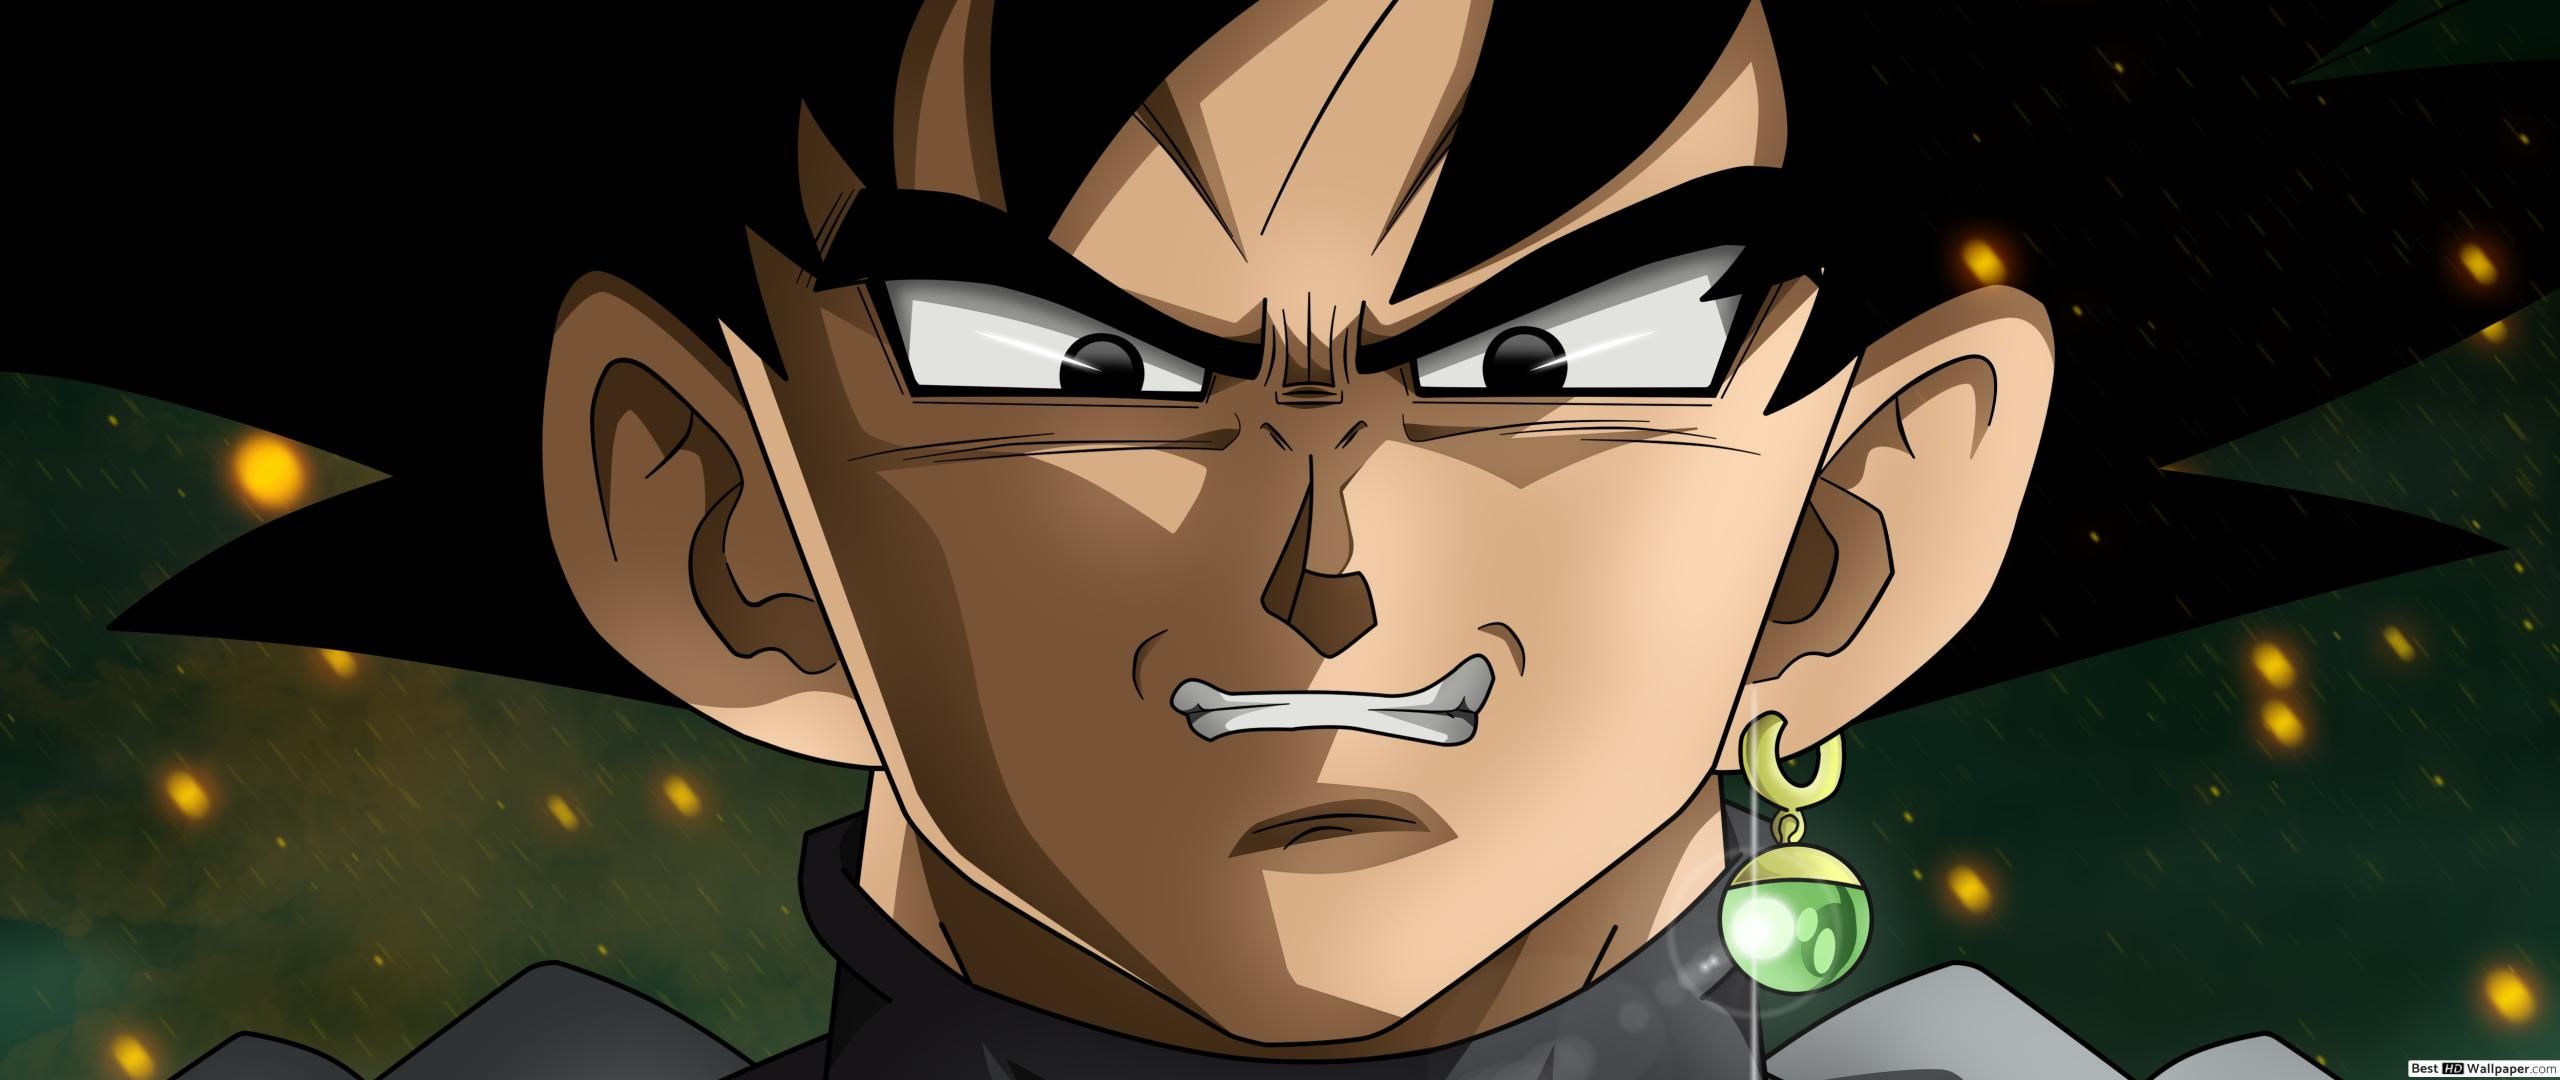 Black Goku Evil Smile HD wallpapers download.